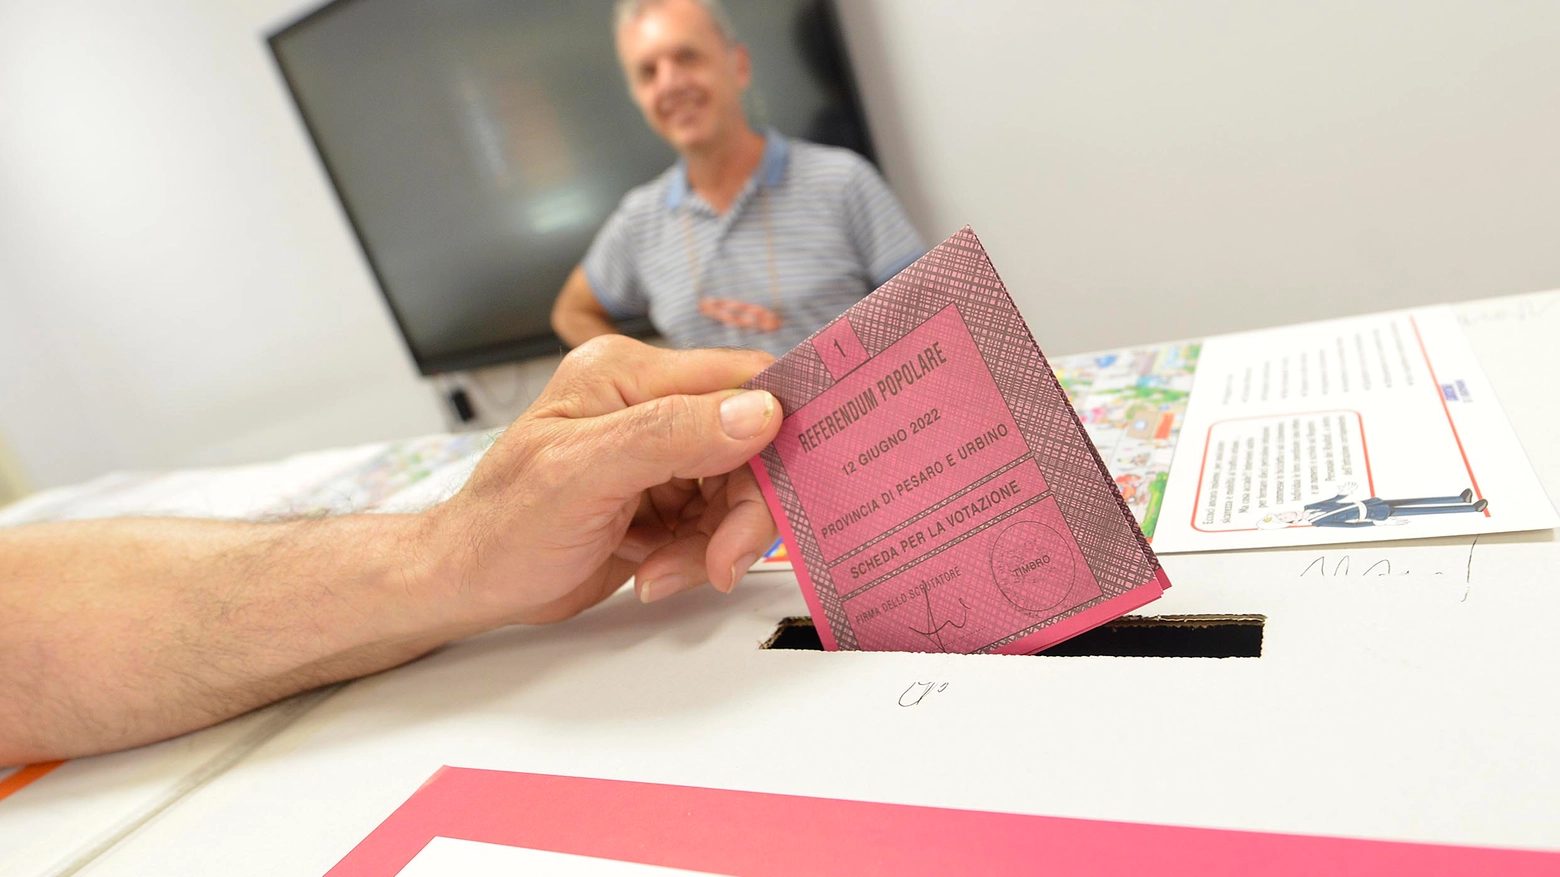 Una scheda nell'urna durante un referendum, foto generica